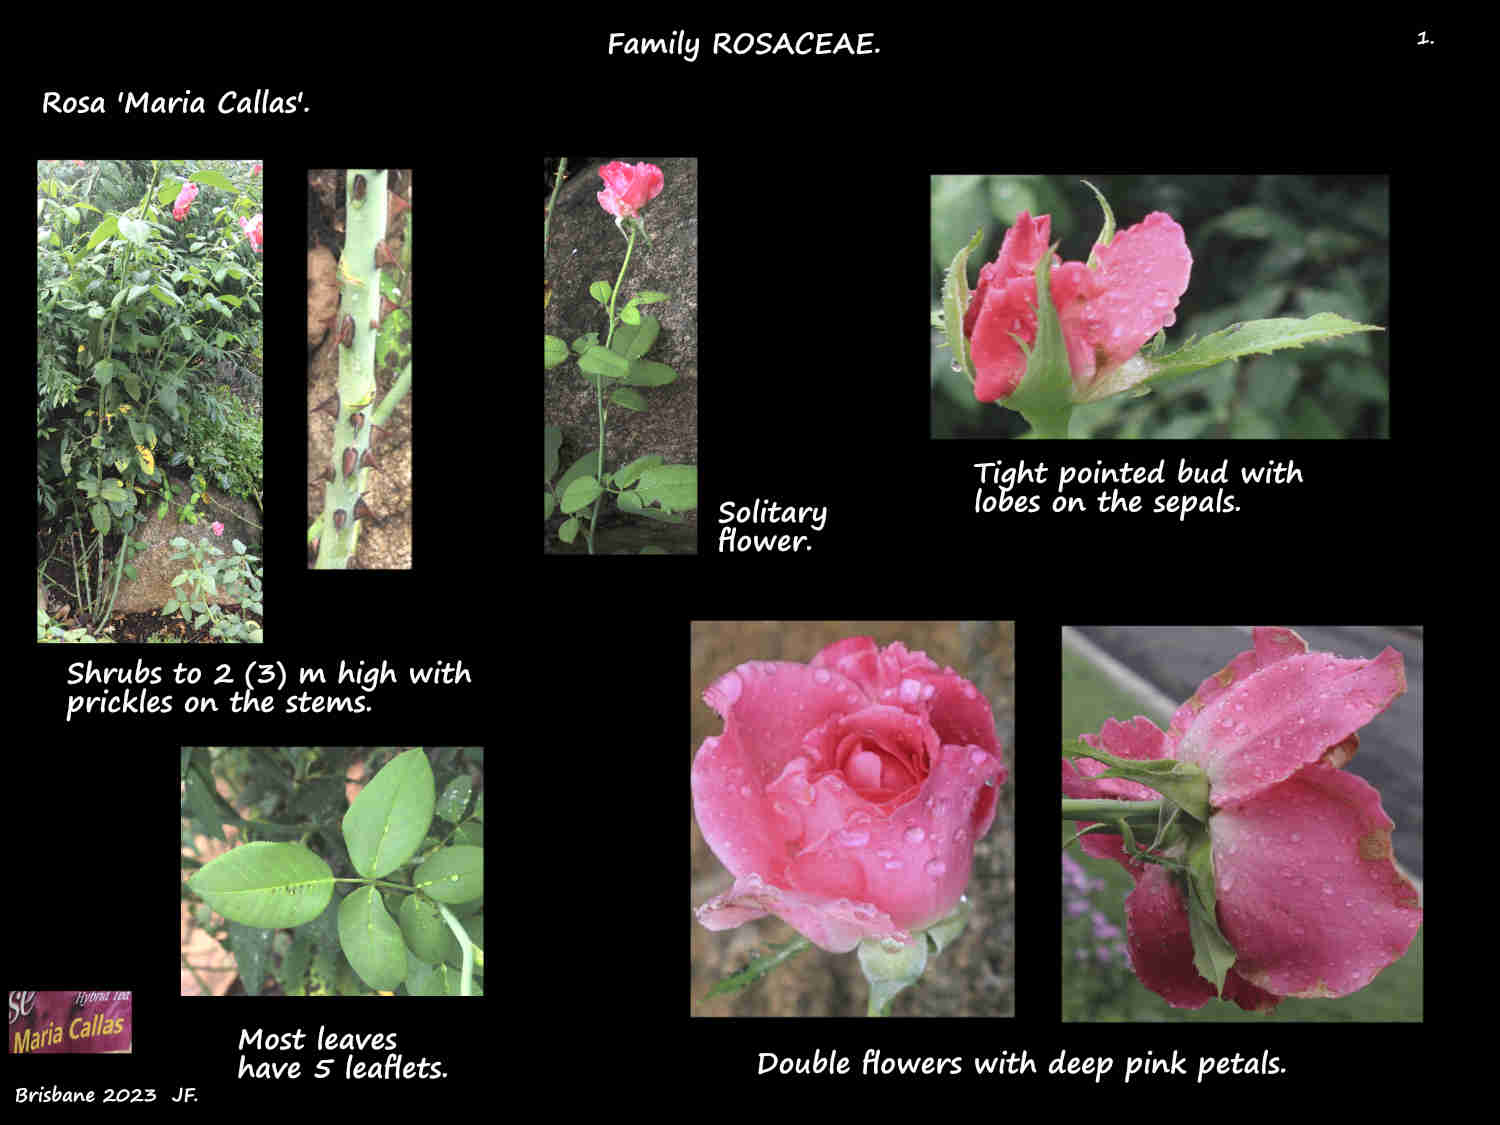 1 Rosa 'Maria Callas' shrub & flowers